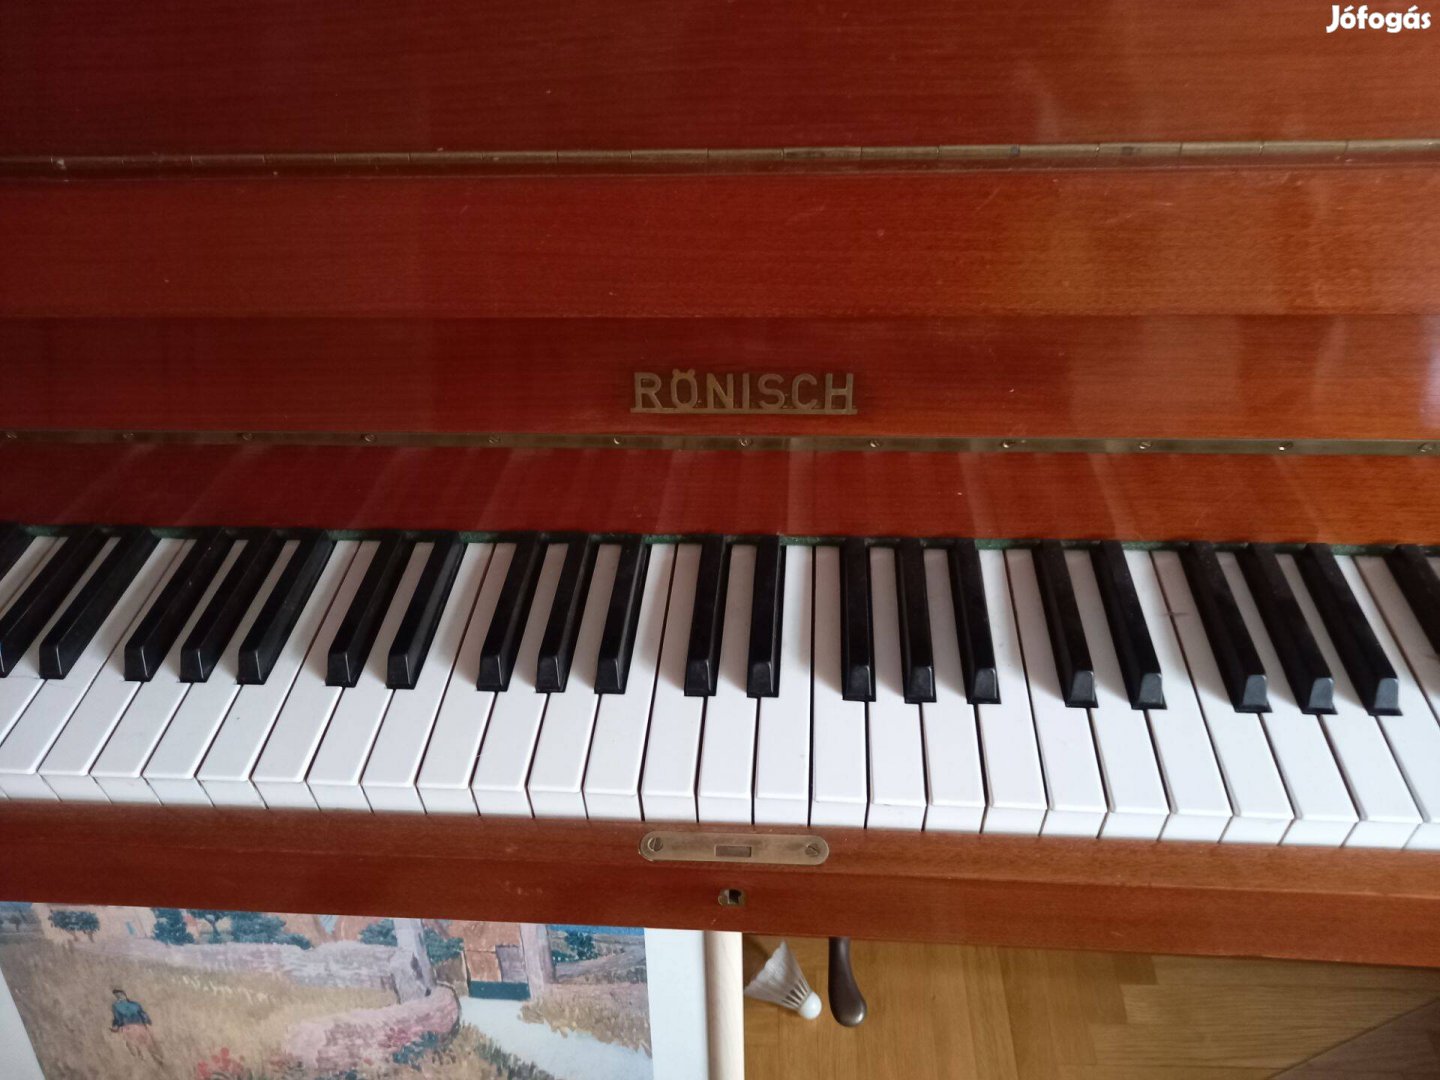 Rönisch pianino